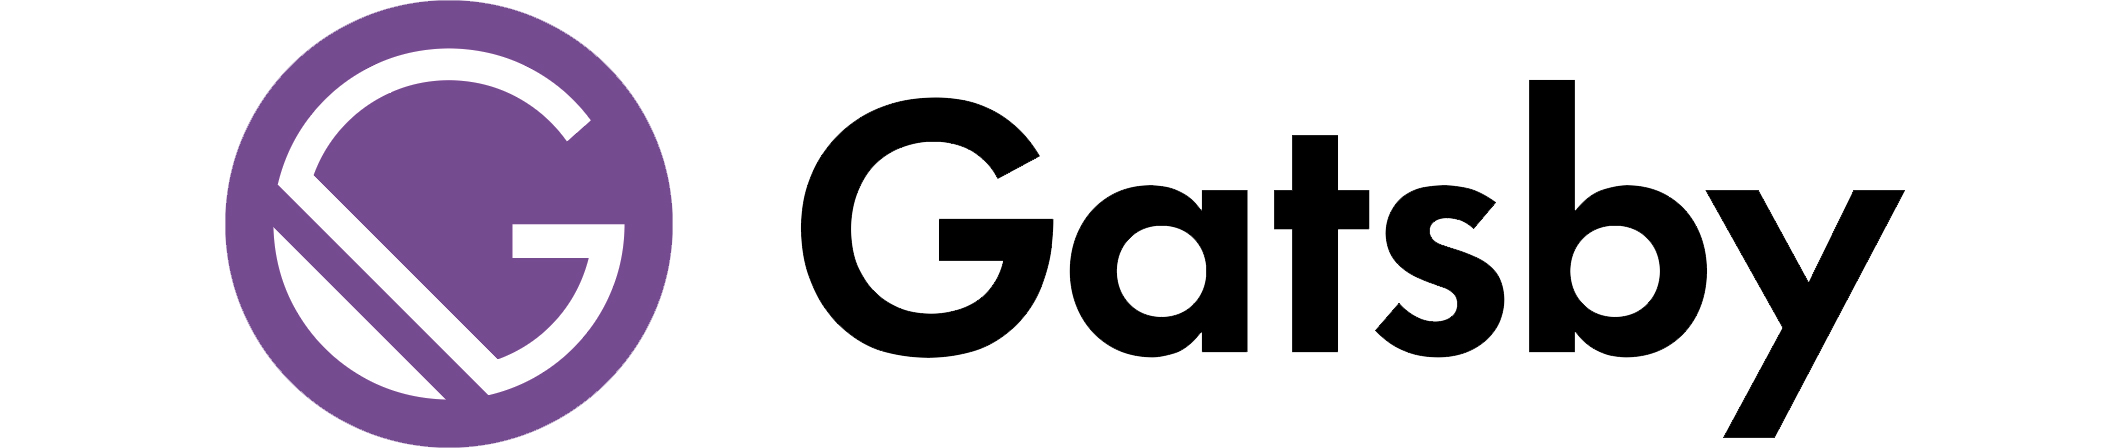 gatsby js logo